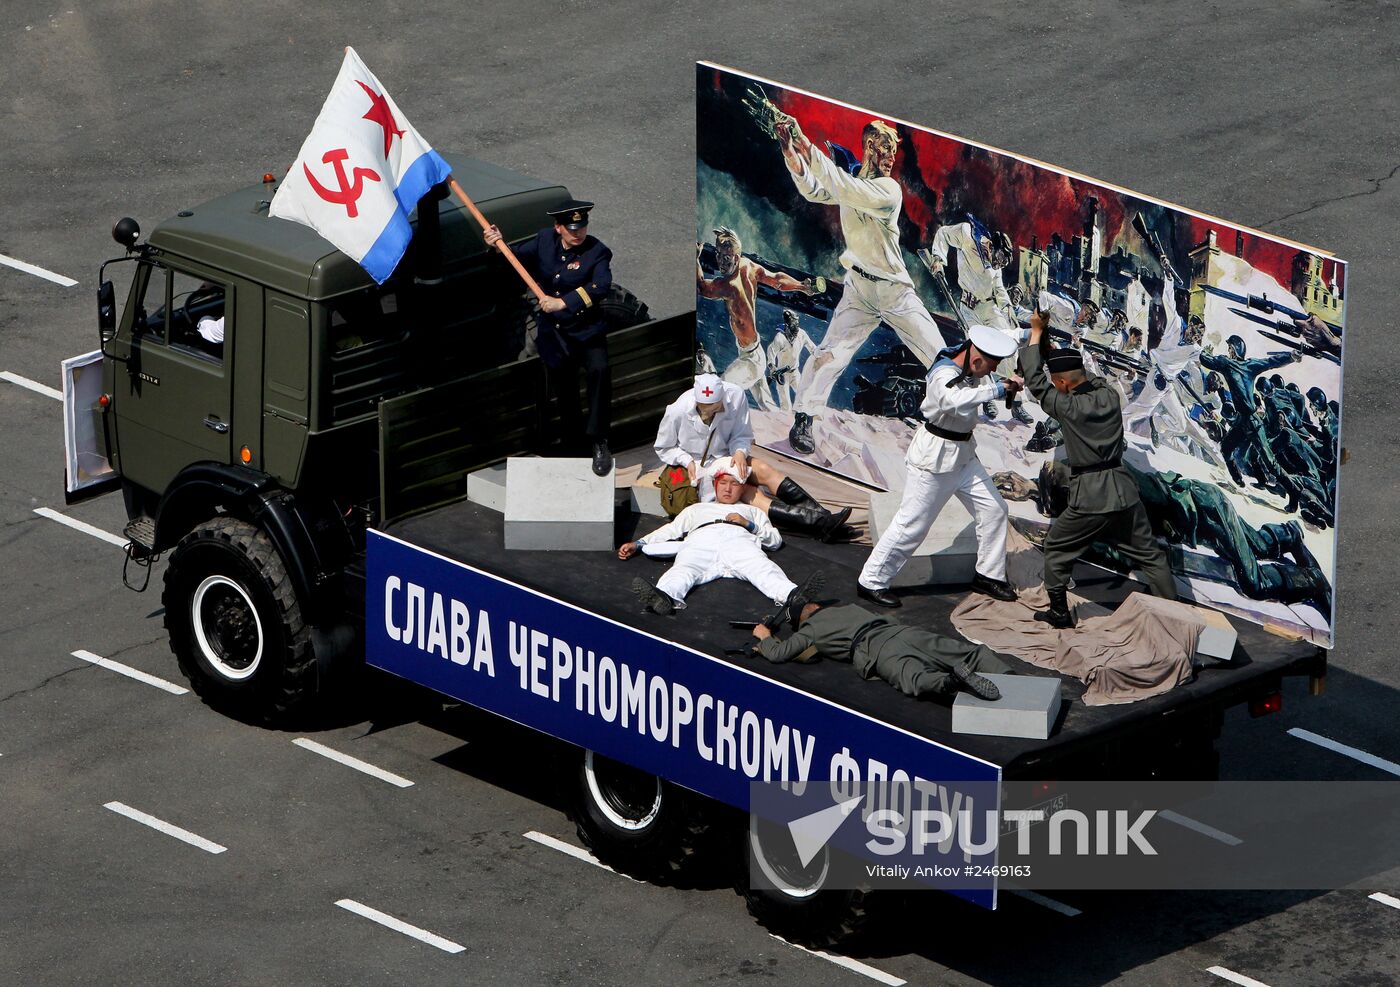 Russian Navy Day celebrations in Vladivostok